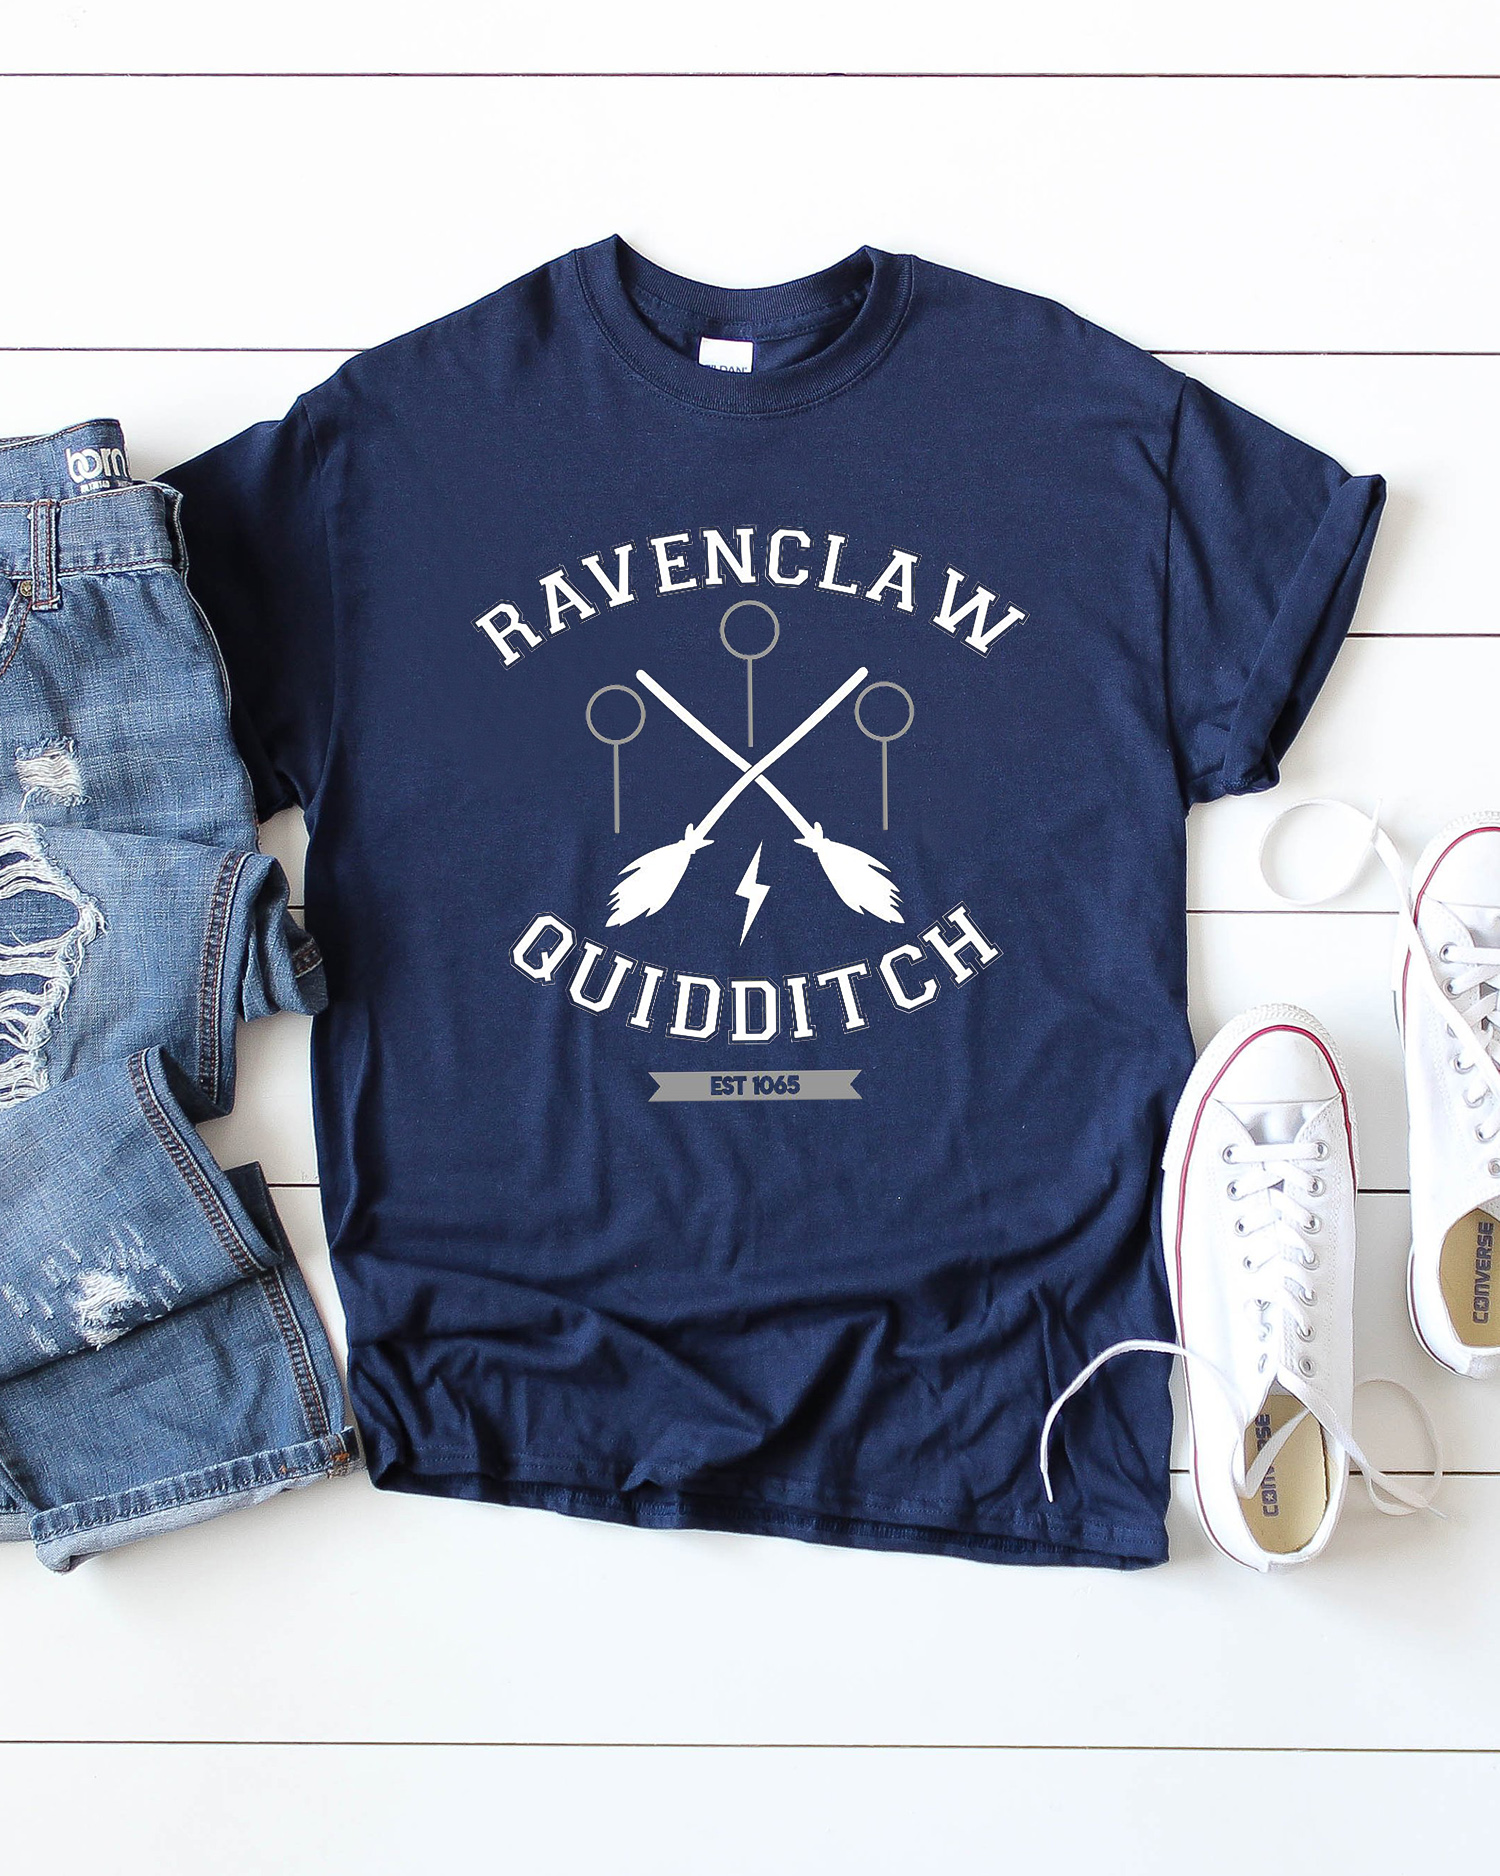 Ravenclaw Quidditch Shirt + FREE SVG File